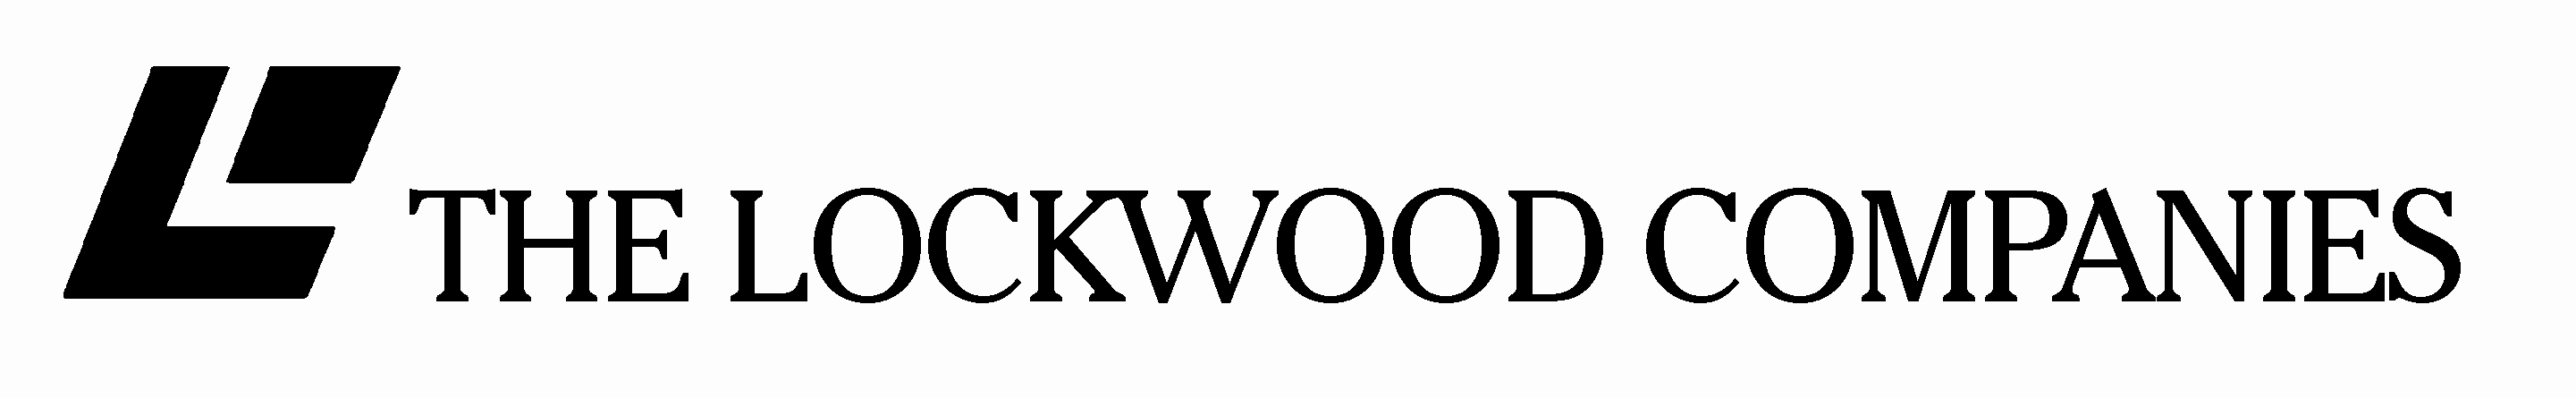 The Lockwood Companies Logo